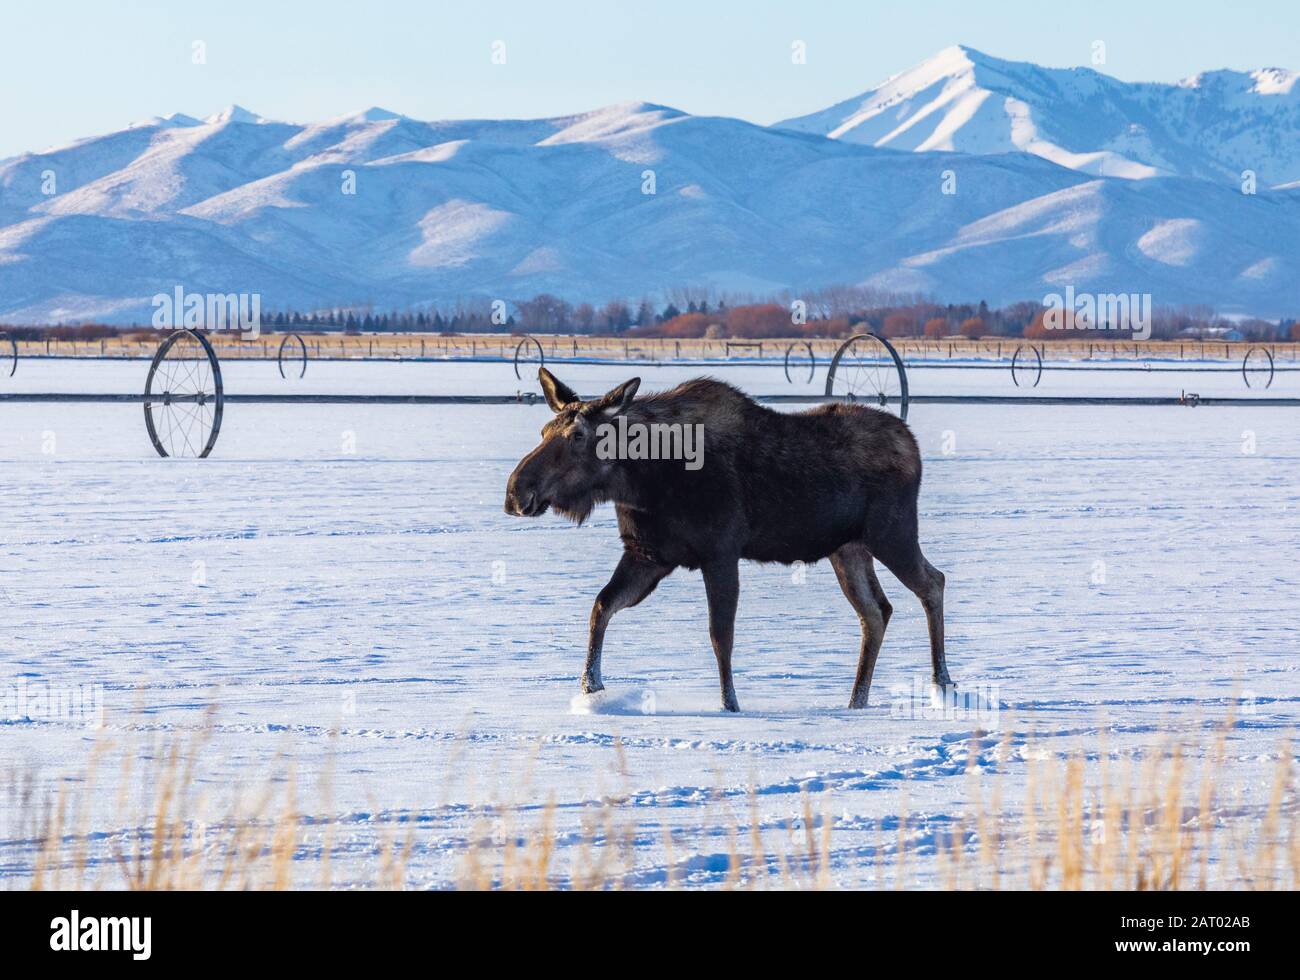 Moose walking on snow Stock Photo